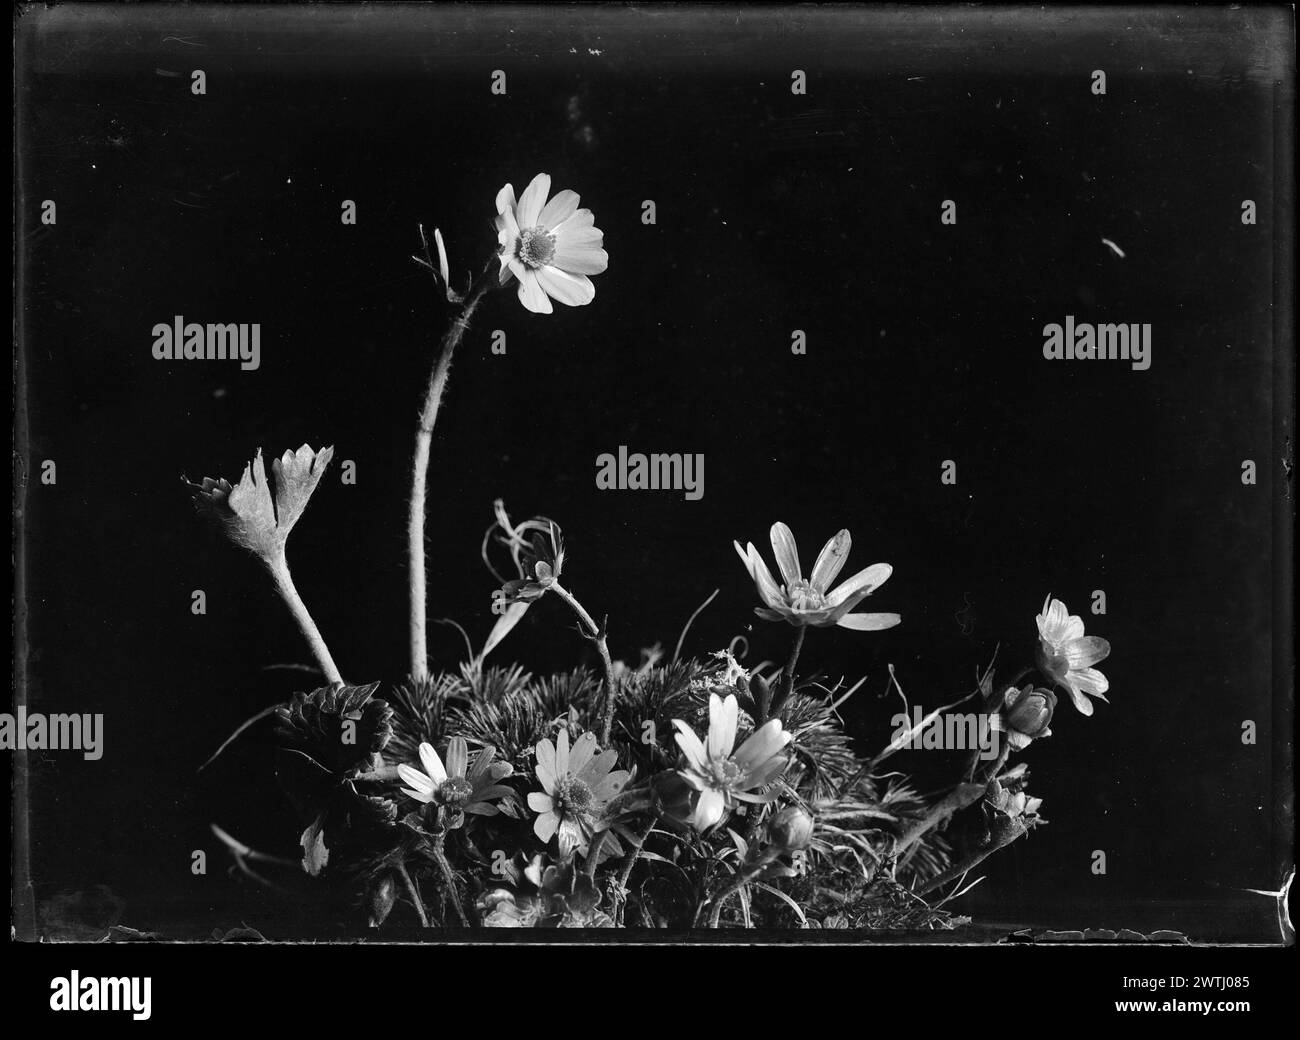 Anemone tenuicaulis gelatin silver negatives, black-and-white negatives Stock Photo